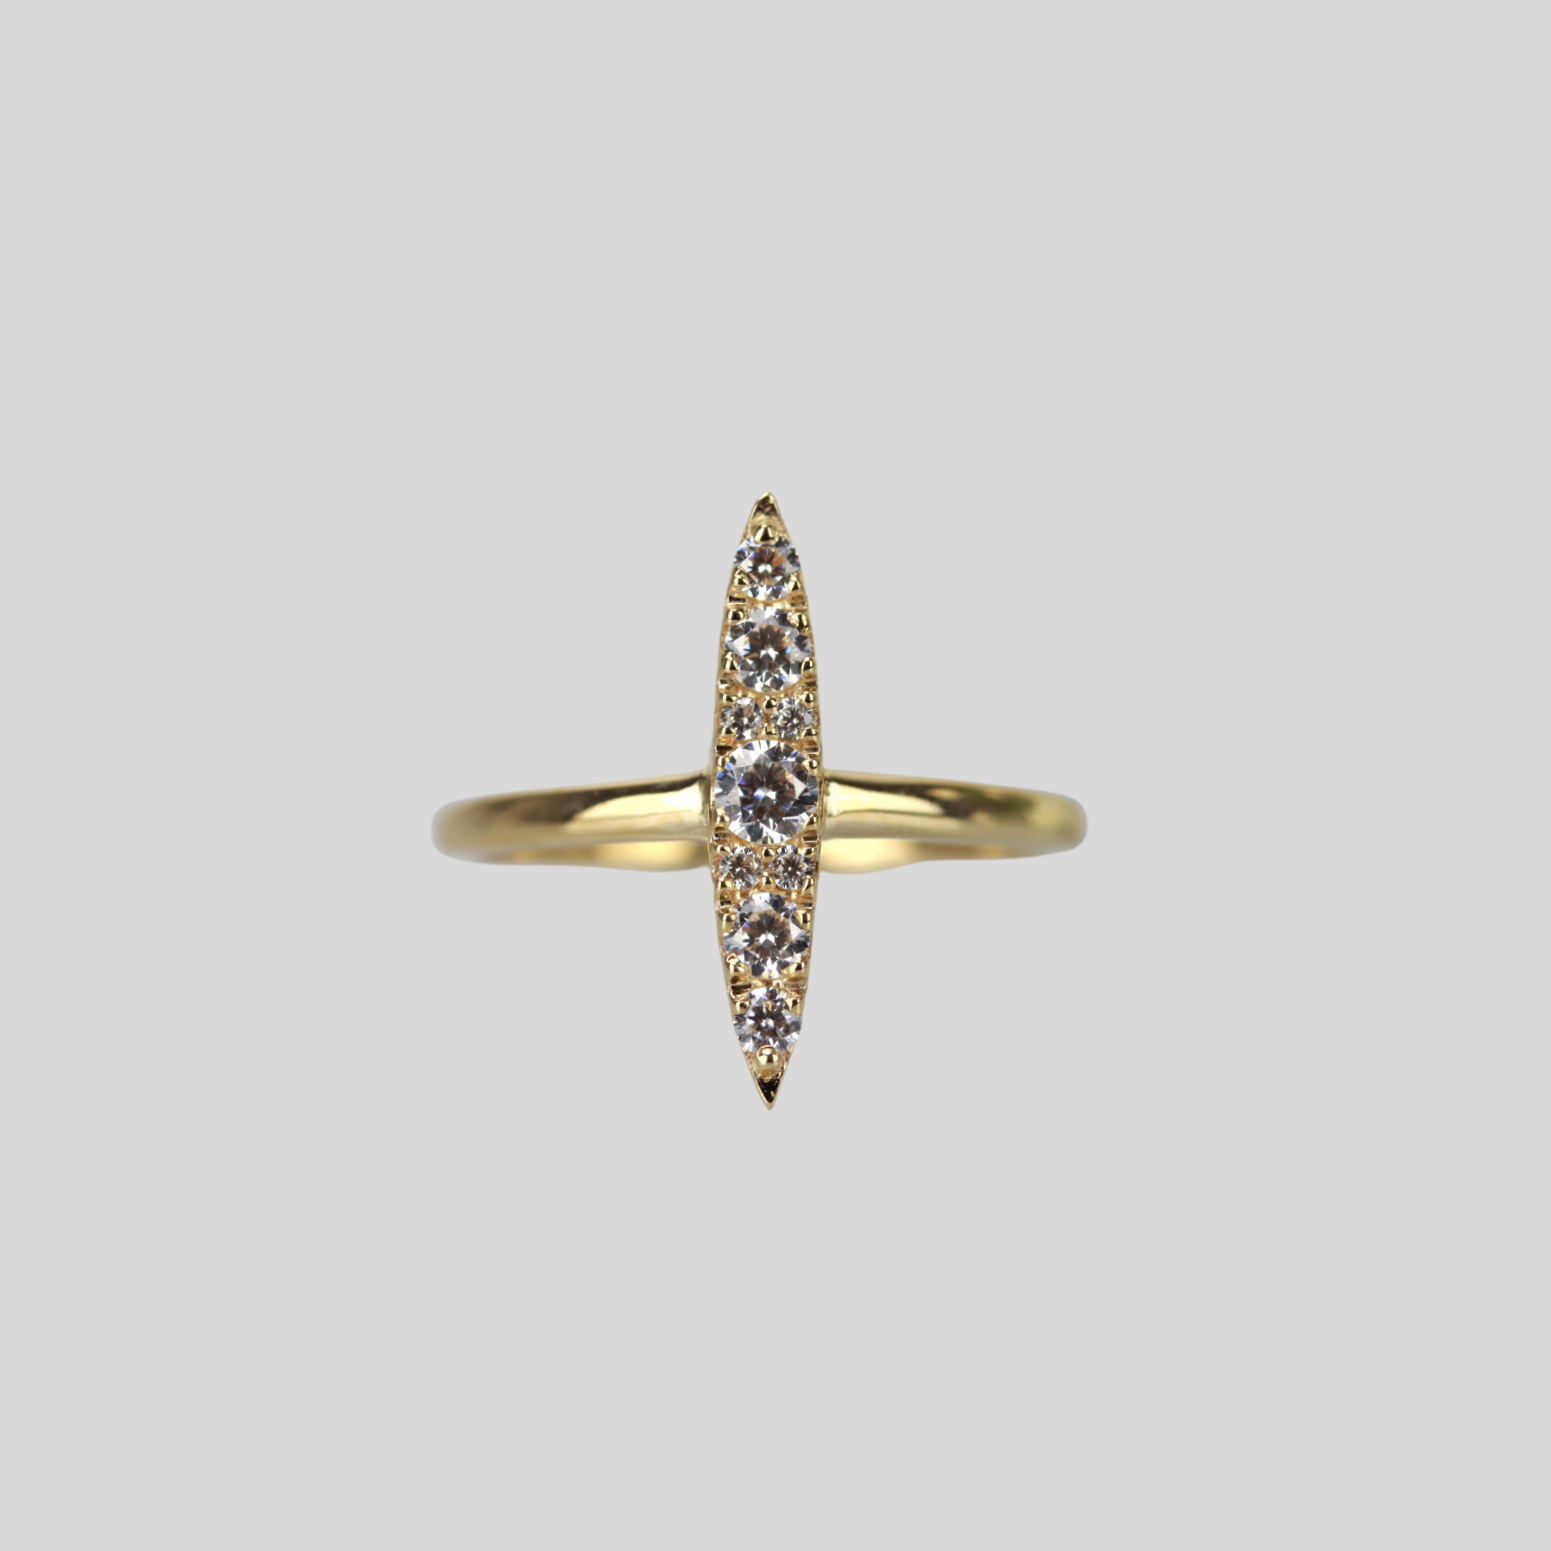 Solid 14k gold sleek navette ring in cubic zirconia